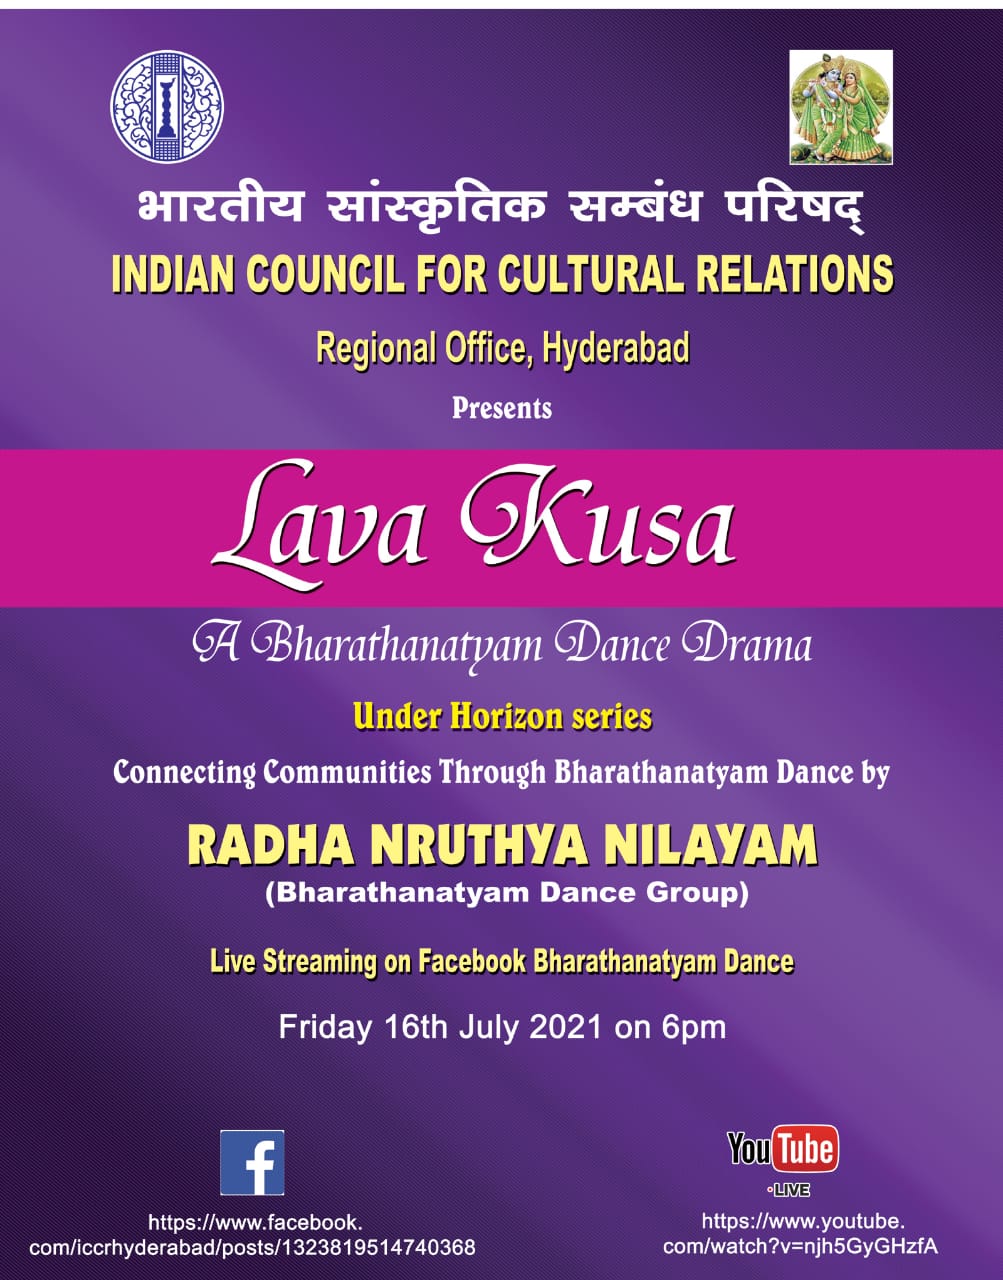 LAVA KUSA - A Bharathanatyam Dance Drama performance on Friday 16th July, 2021 at 6.00 PM by ICCR Hyderabad